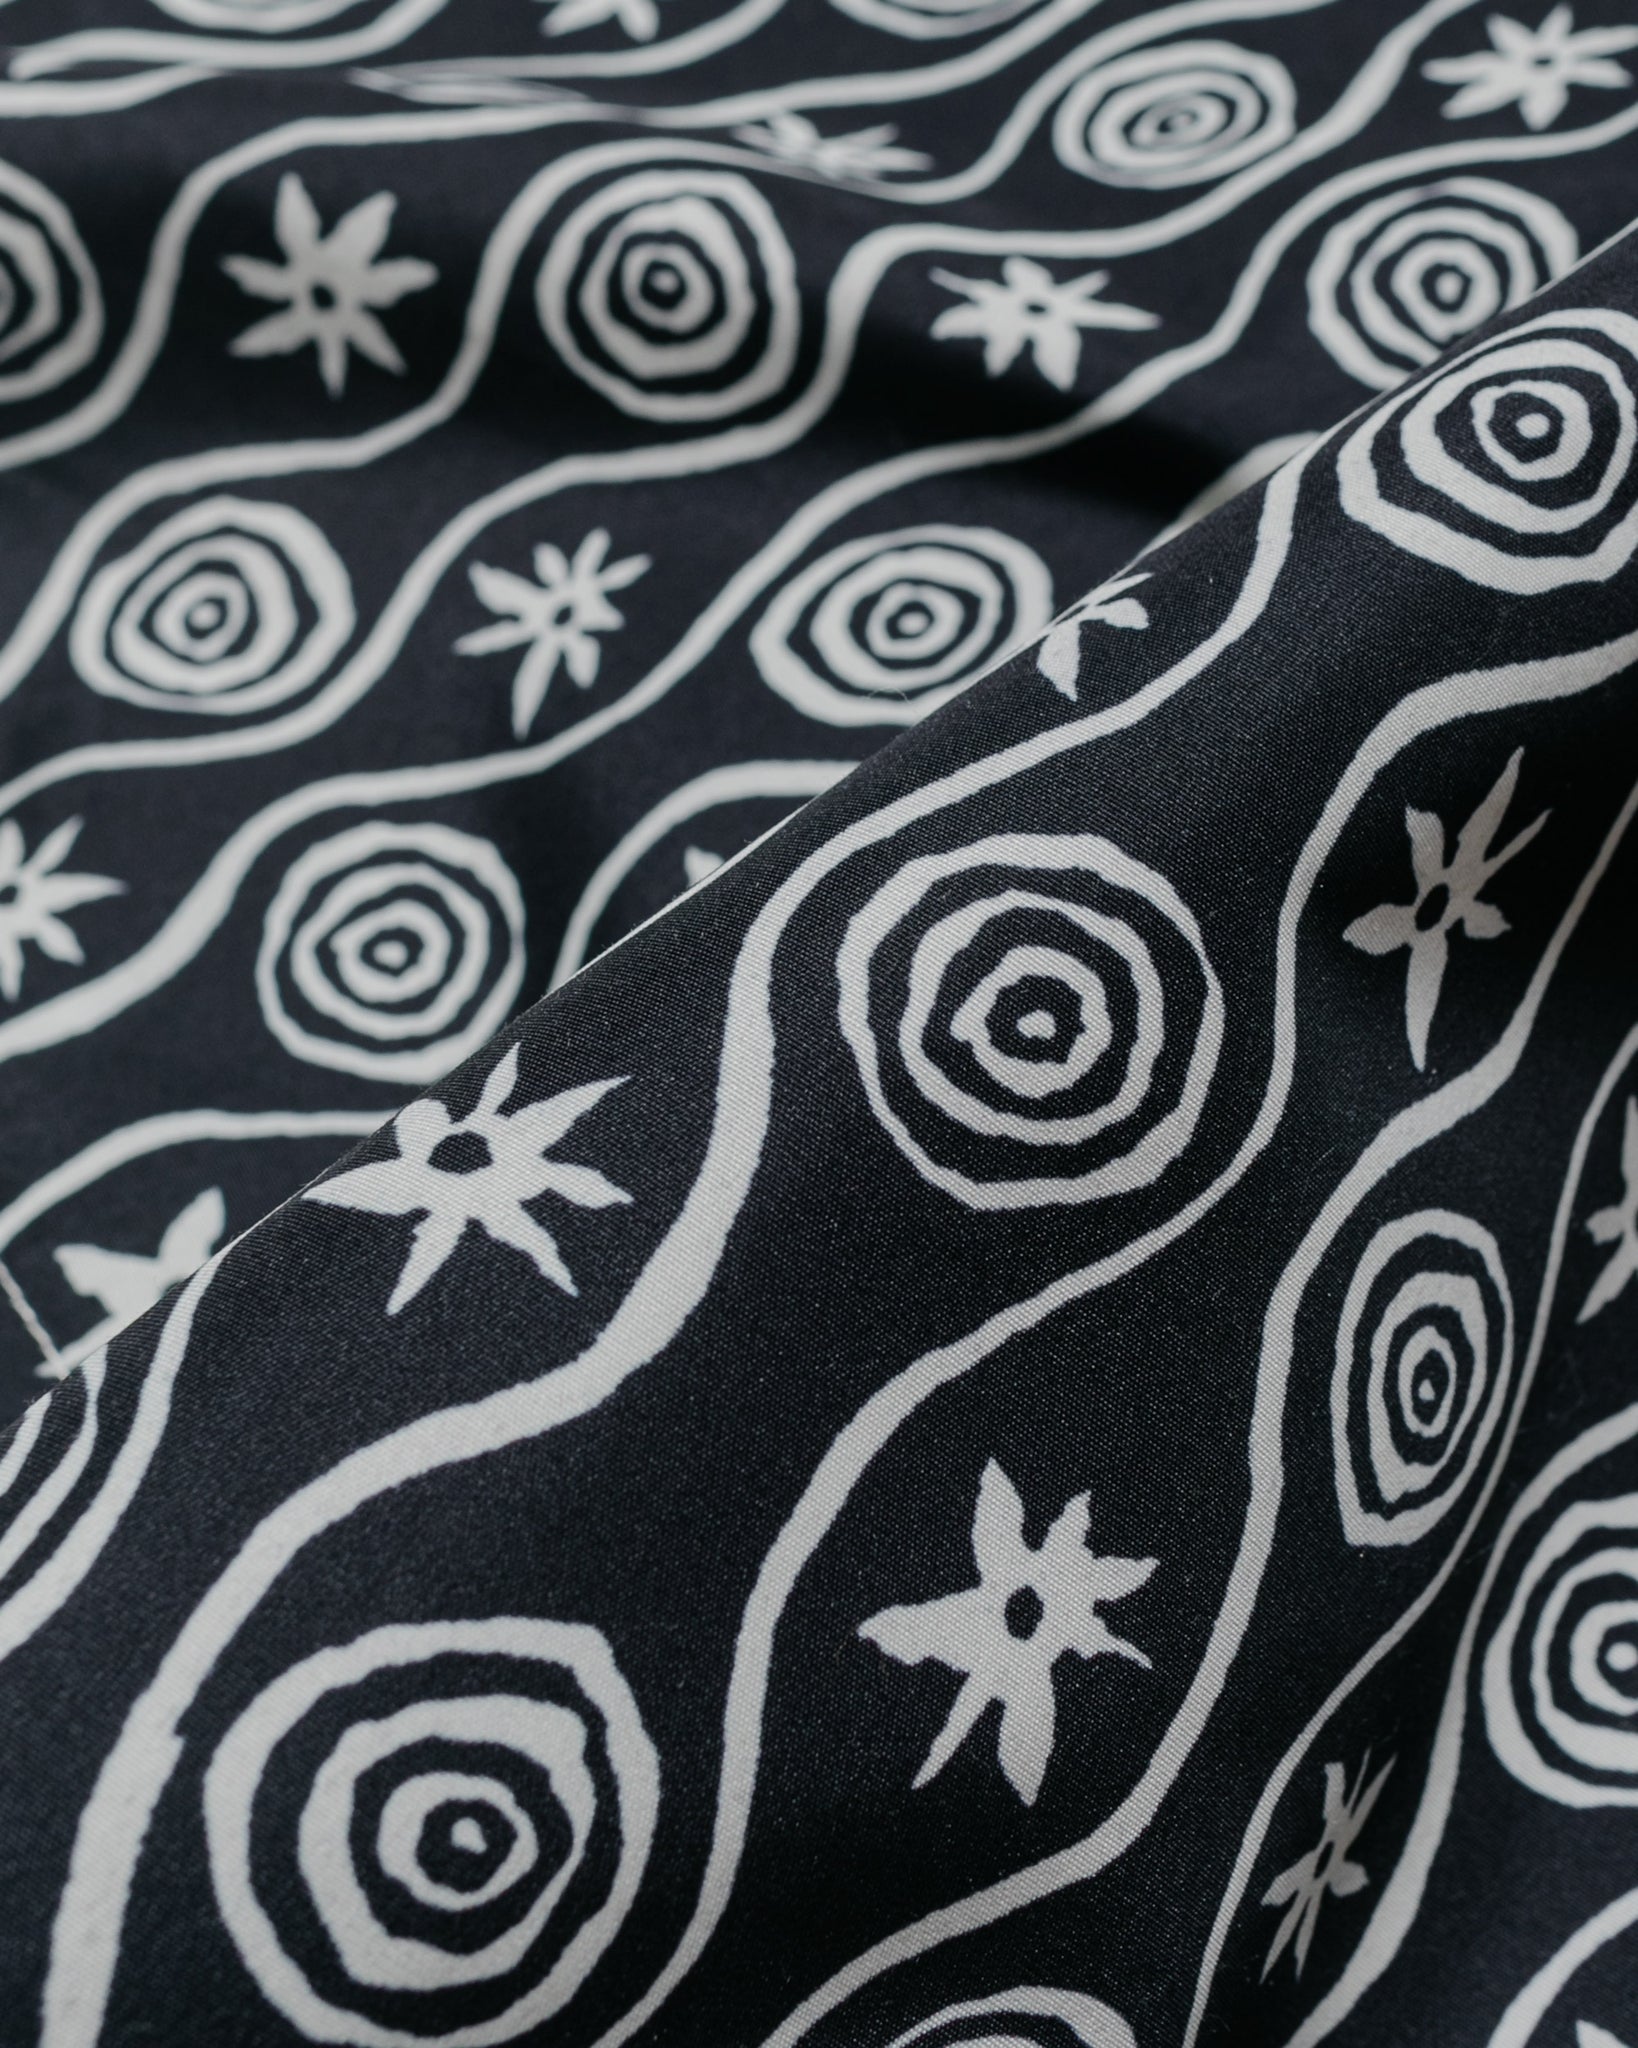 Bather Black Sunwhirl Print Swim Trunk fabric